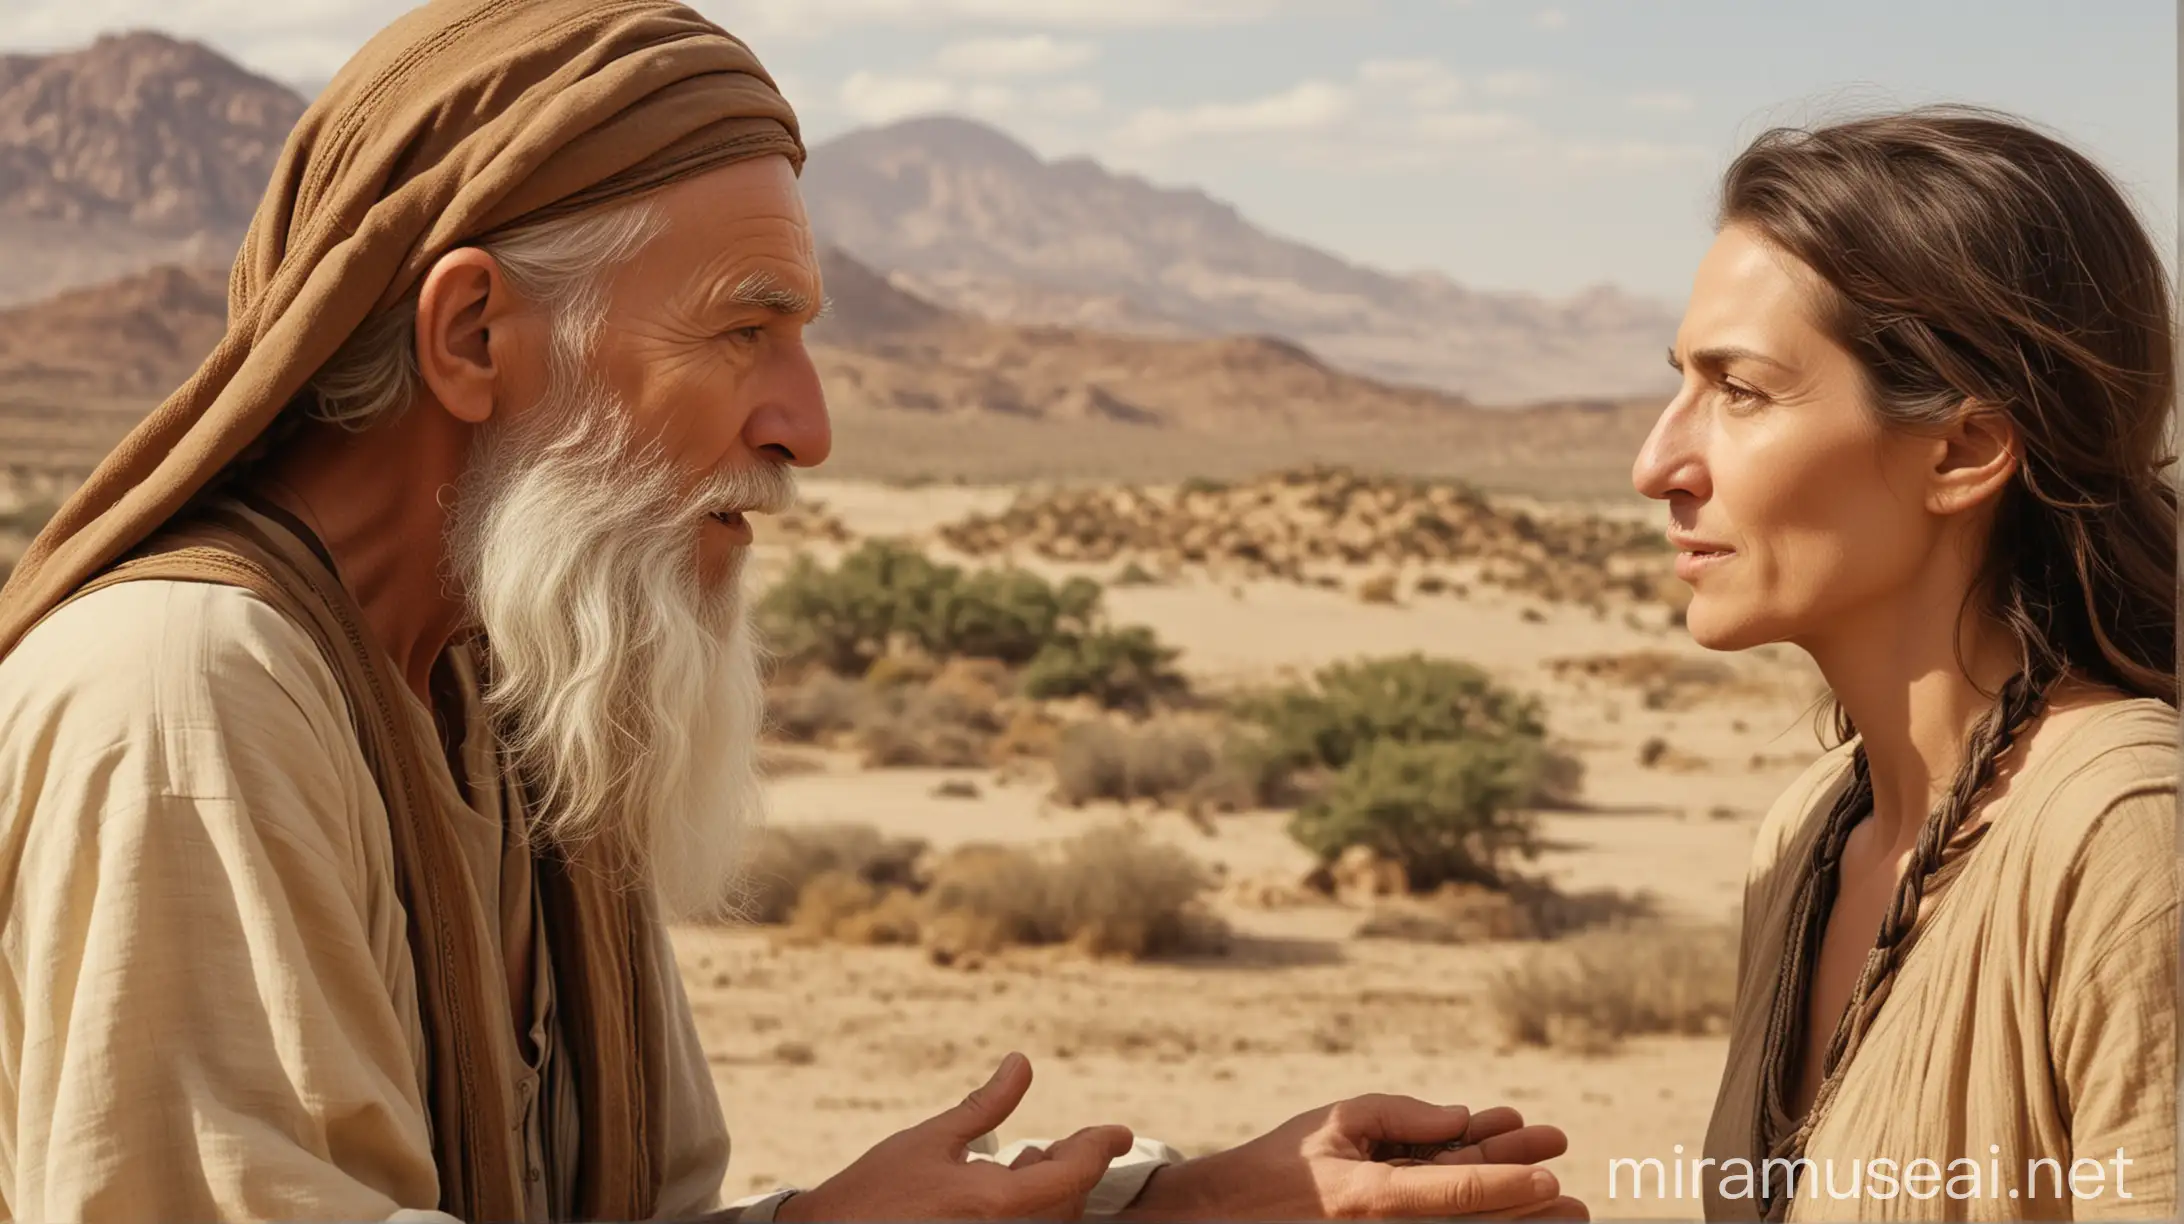 Ancient Encounter Conversations in the Biblical Desert